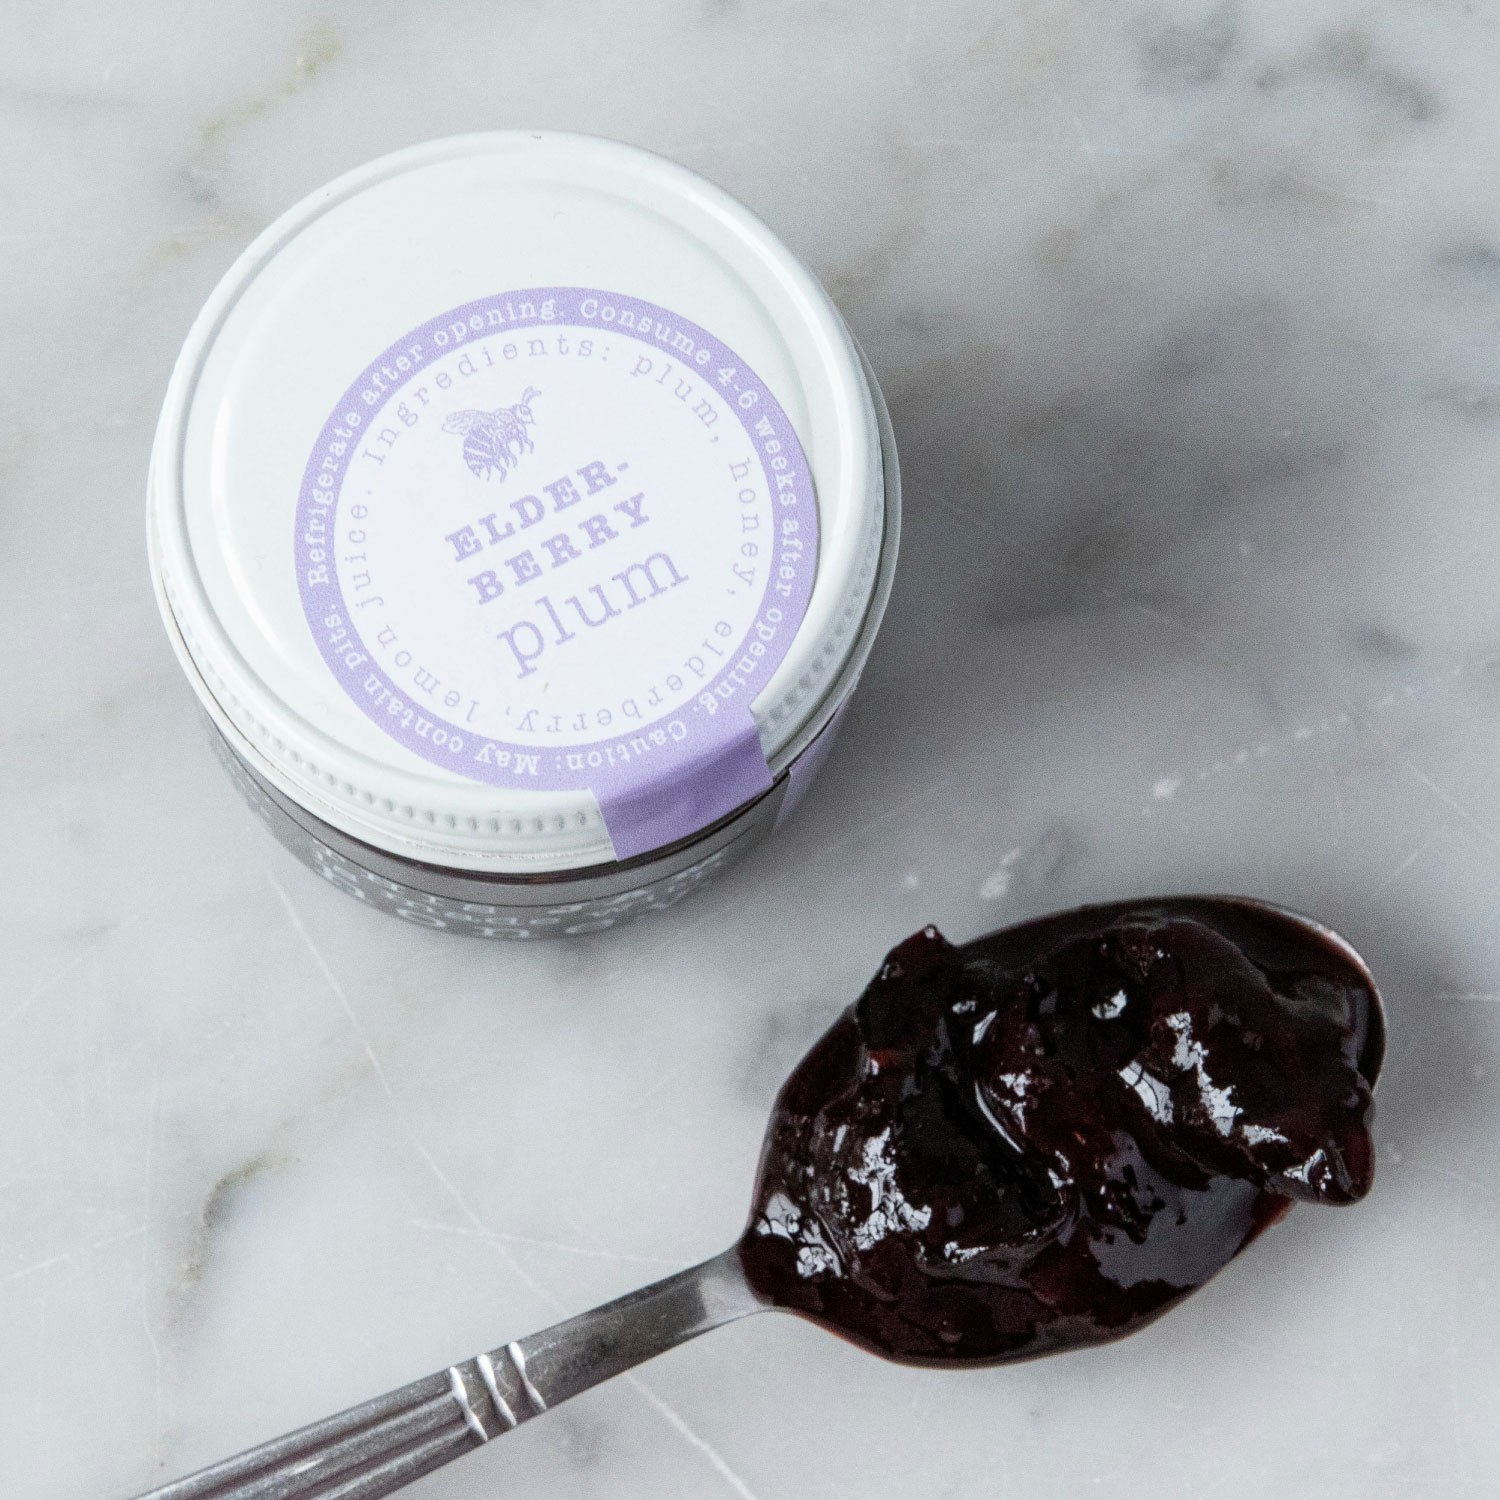 v smiley preserves elderberry plum honey jam specialty foods